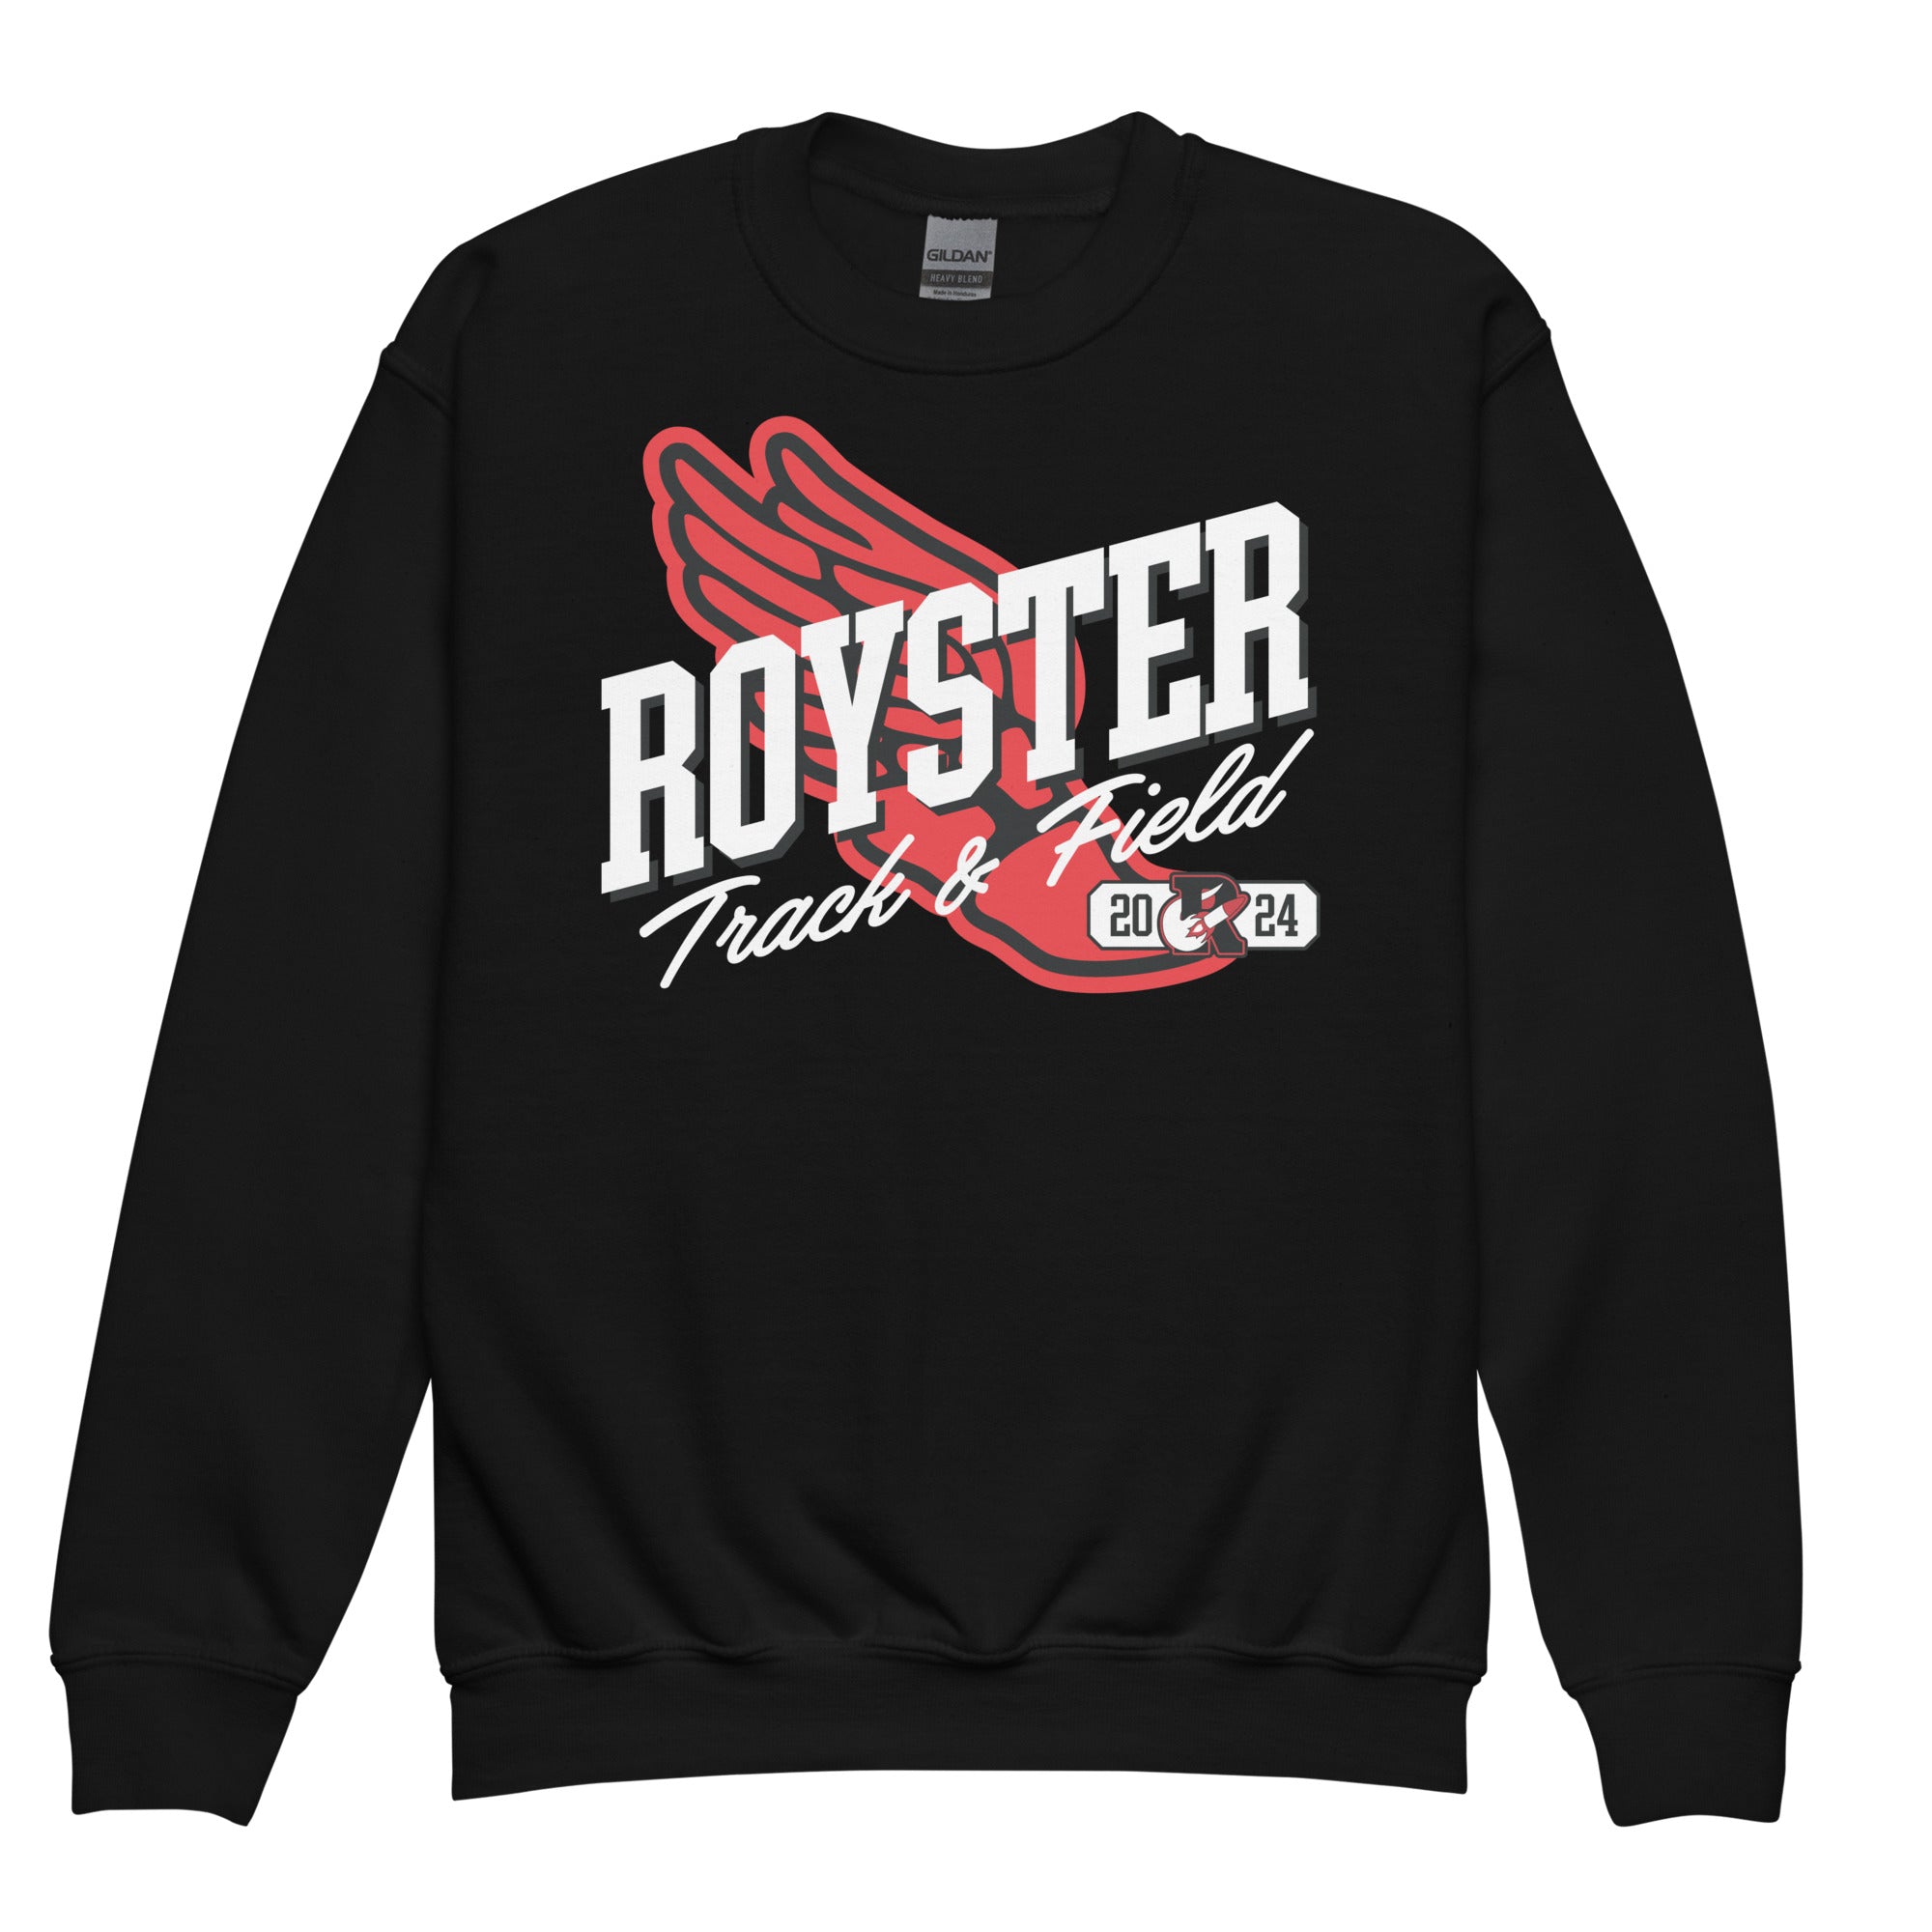 Royster Rockets Track & Field Youth Crew Neck Sweatshirt